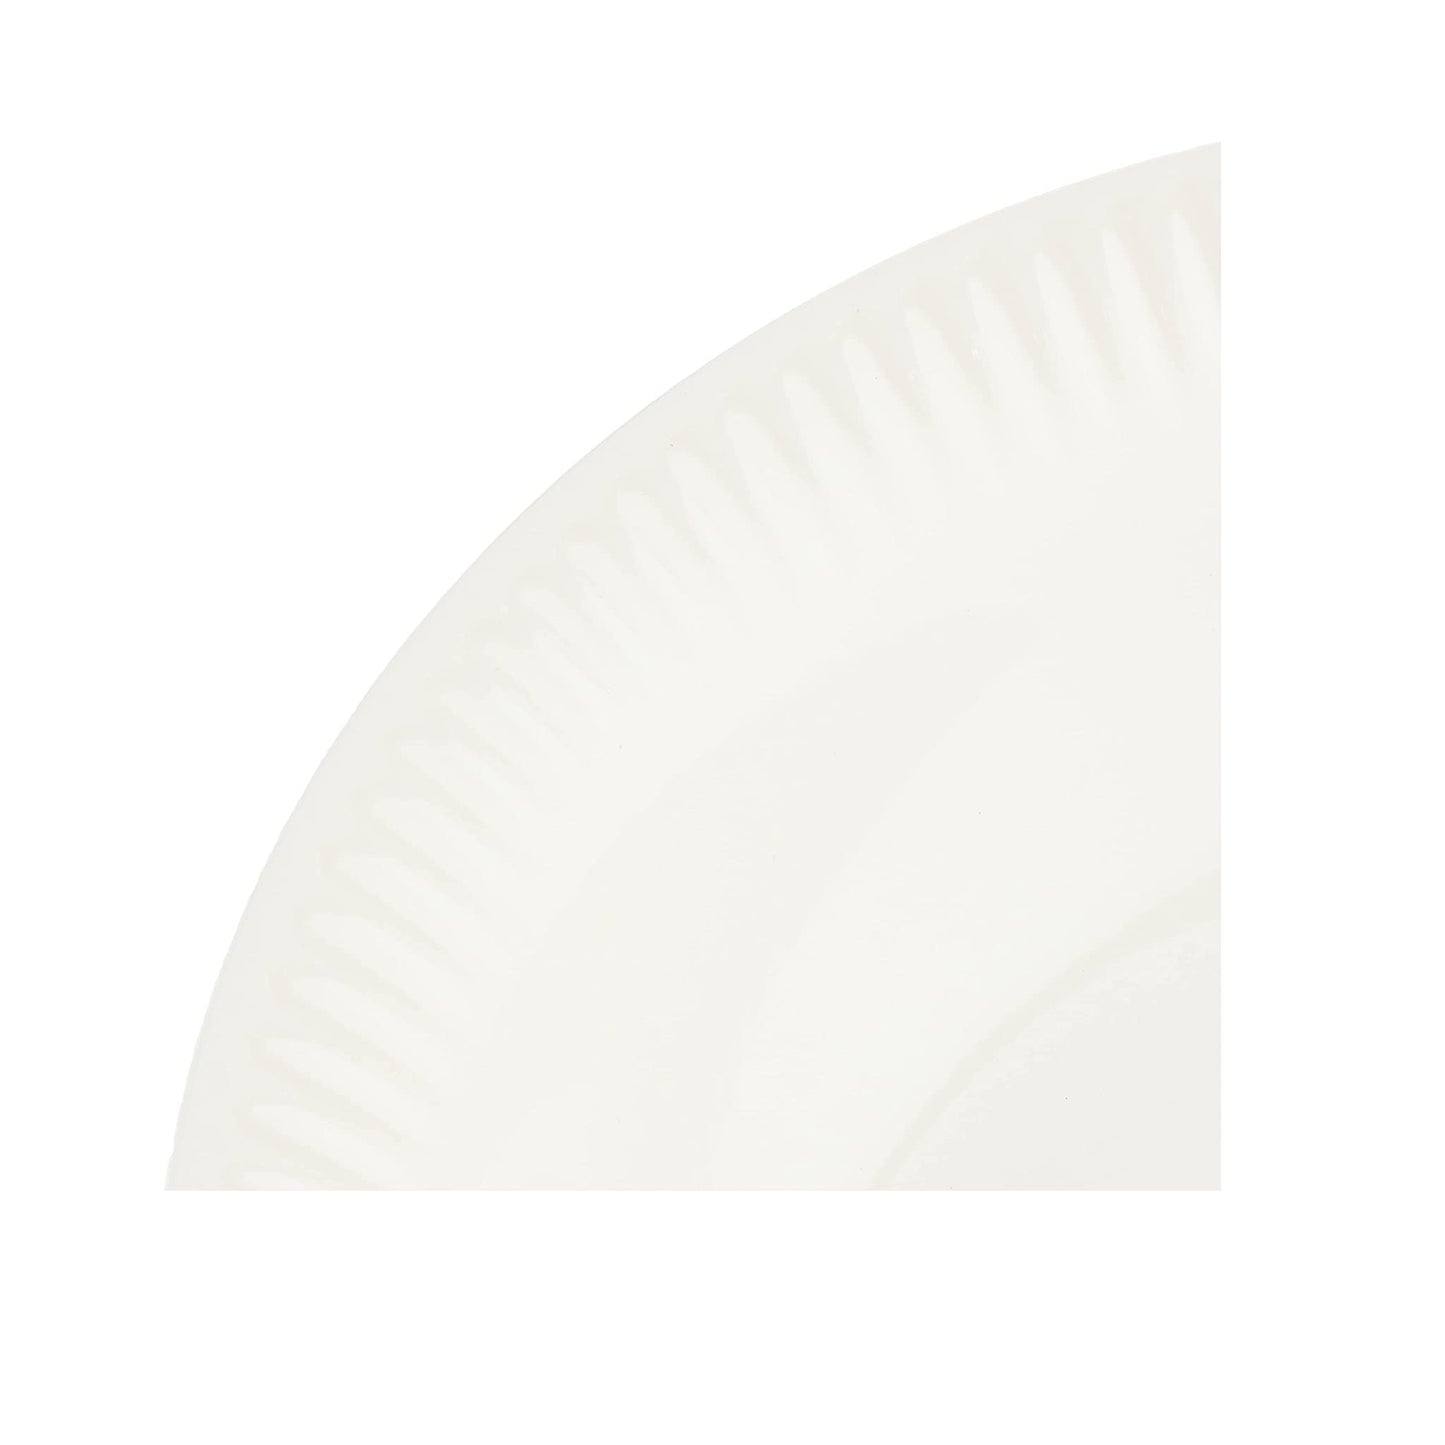 Profile White Porcelain 4-Piece Pasta Bowl Set by Lenox